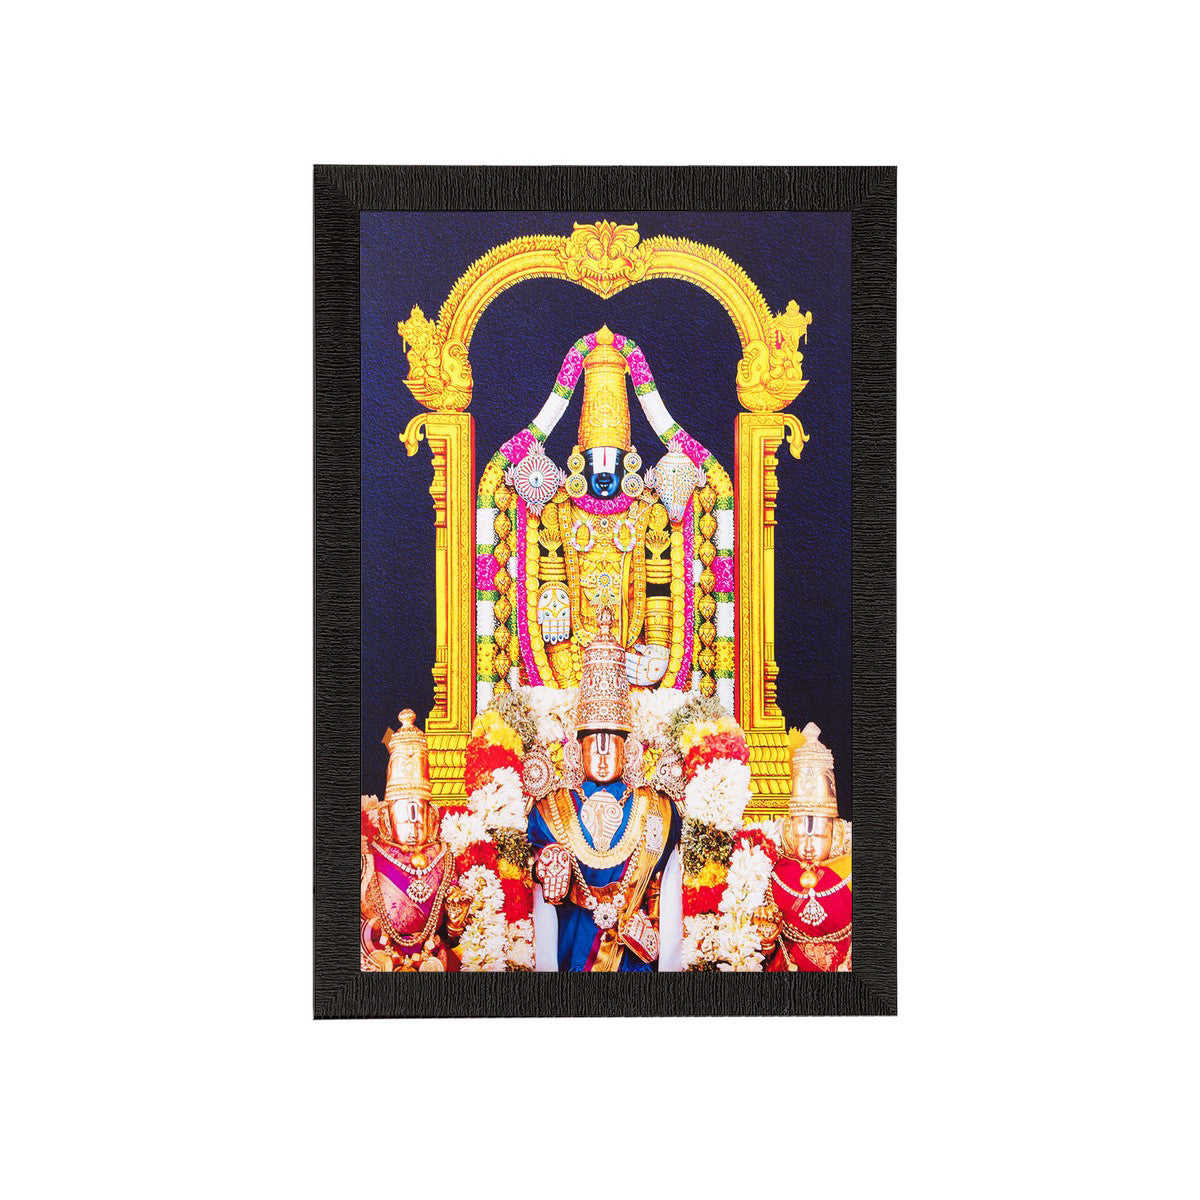 Hindu God Tirupati Balaji Painting Digital Printed Religious Wall Art